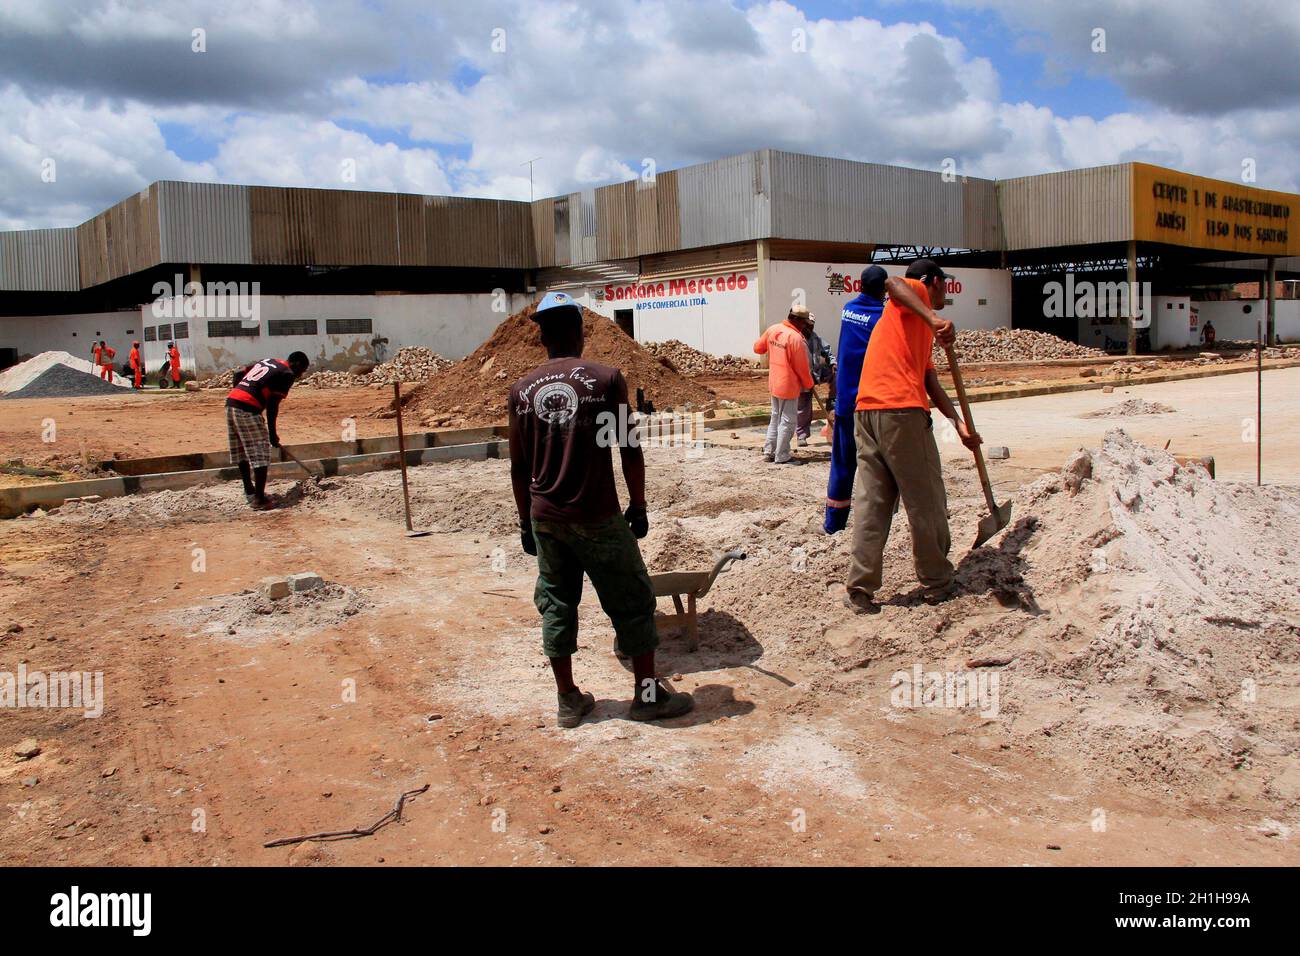 sao sebastiao do passe, bahia / brazil - september 4, 2013: workers are seen during construction of street paving in the city of Sao Sebastiao do Pass Stock Photo